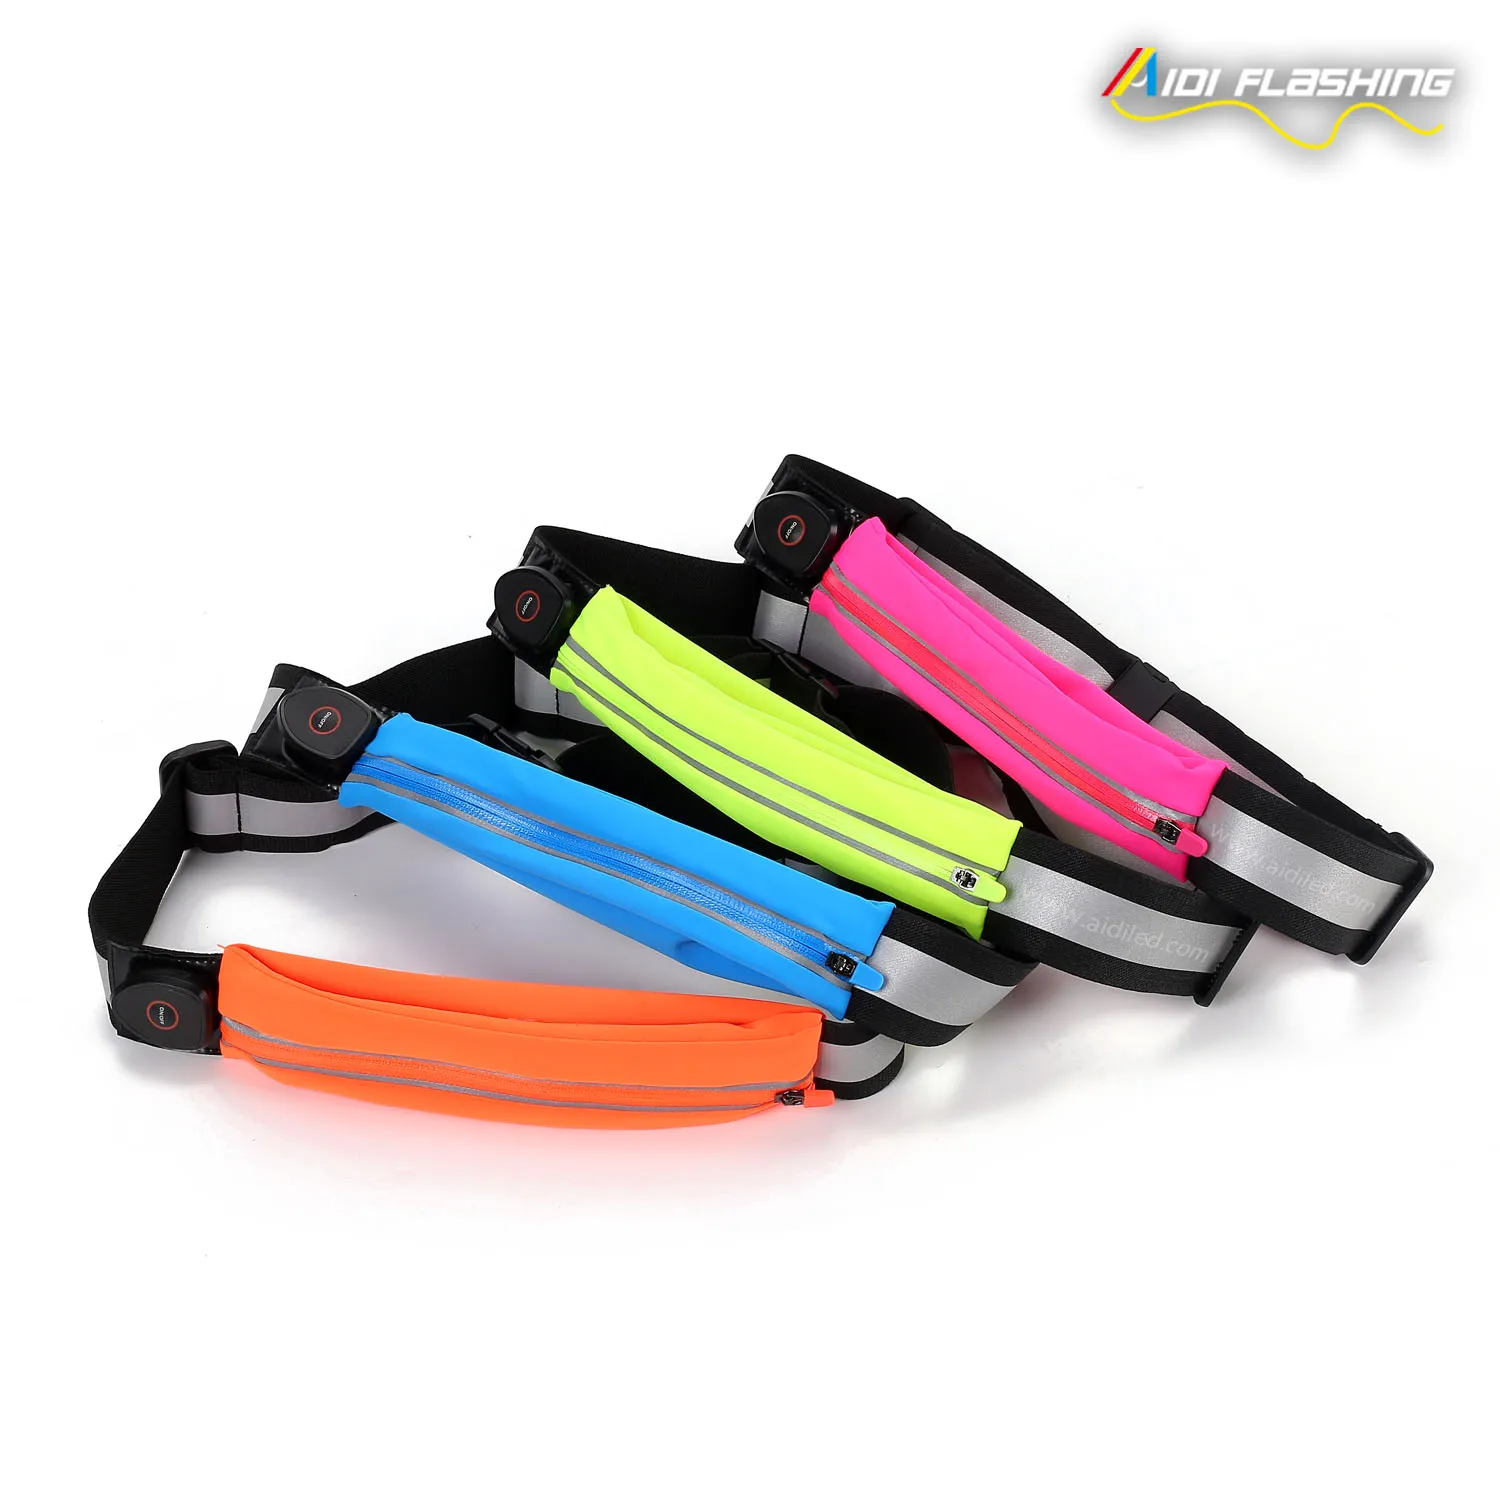 Popular Luminous Waist Bag laycra material water resistant sport waist pocket USB Rechargeable Battery